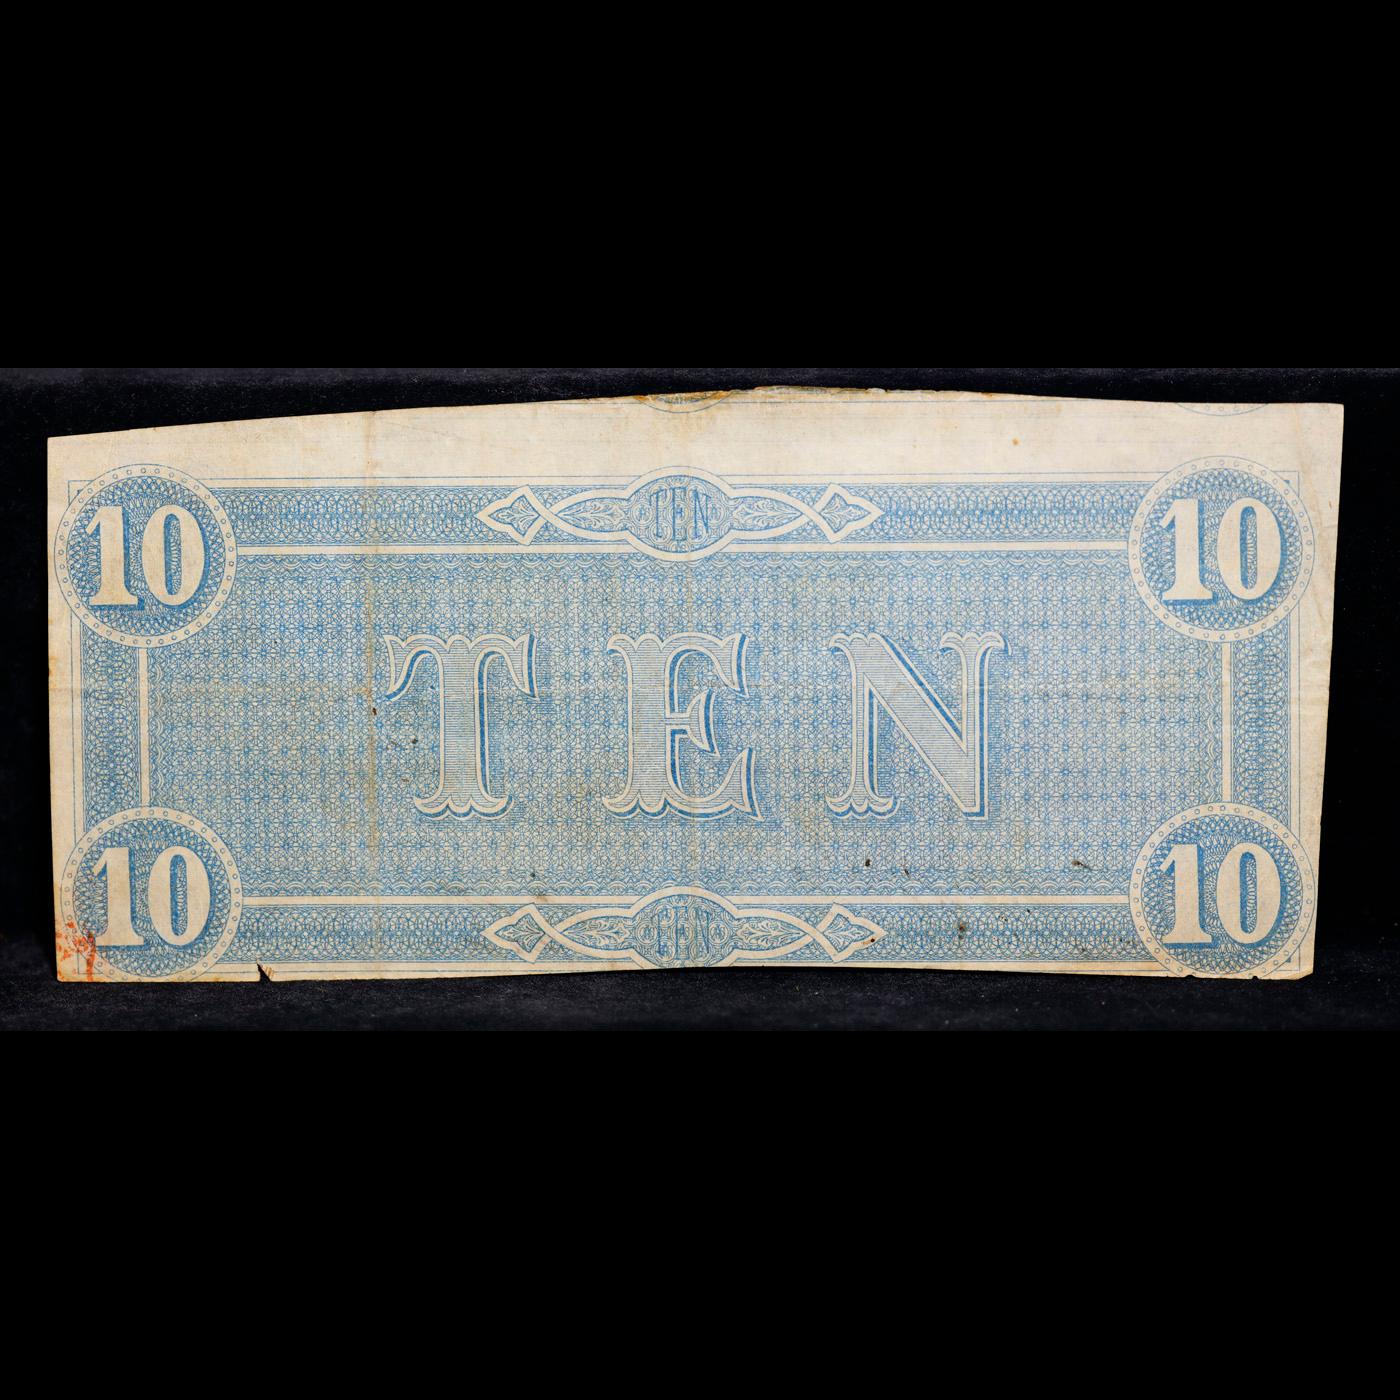 1864 $10 Confederate Note, T68 Grades Select AU